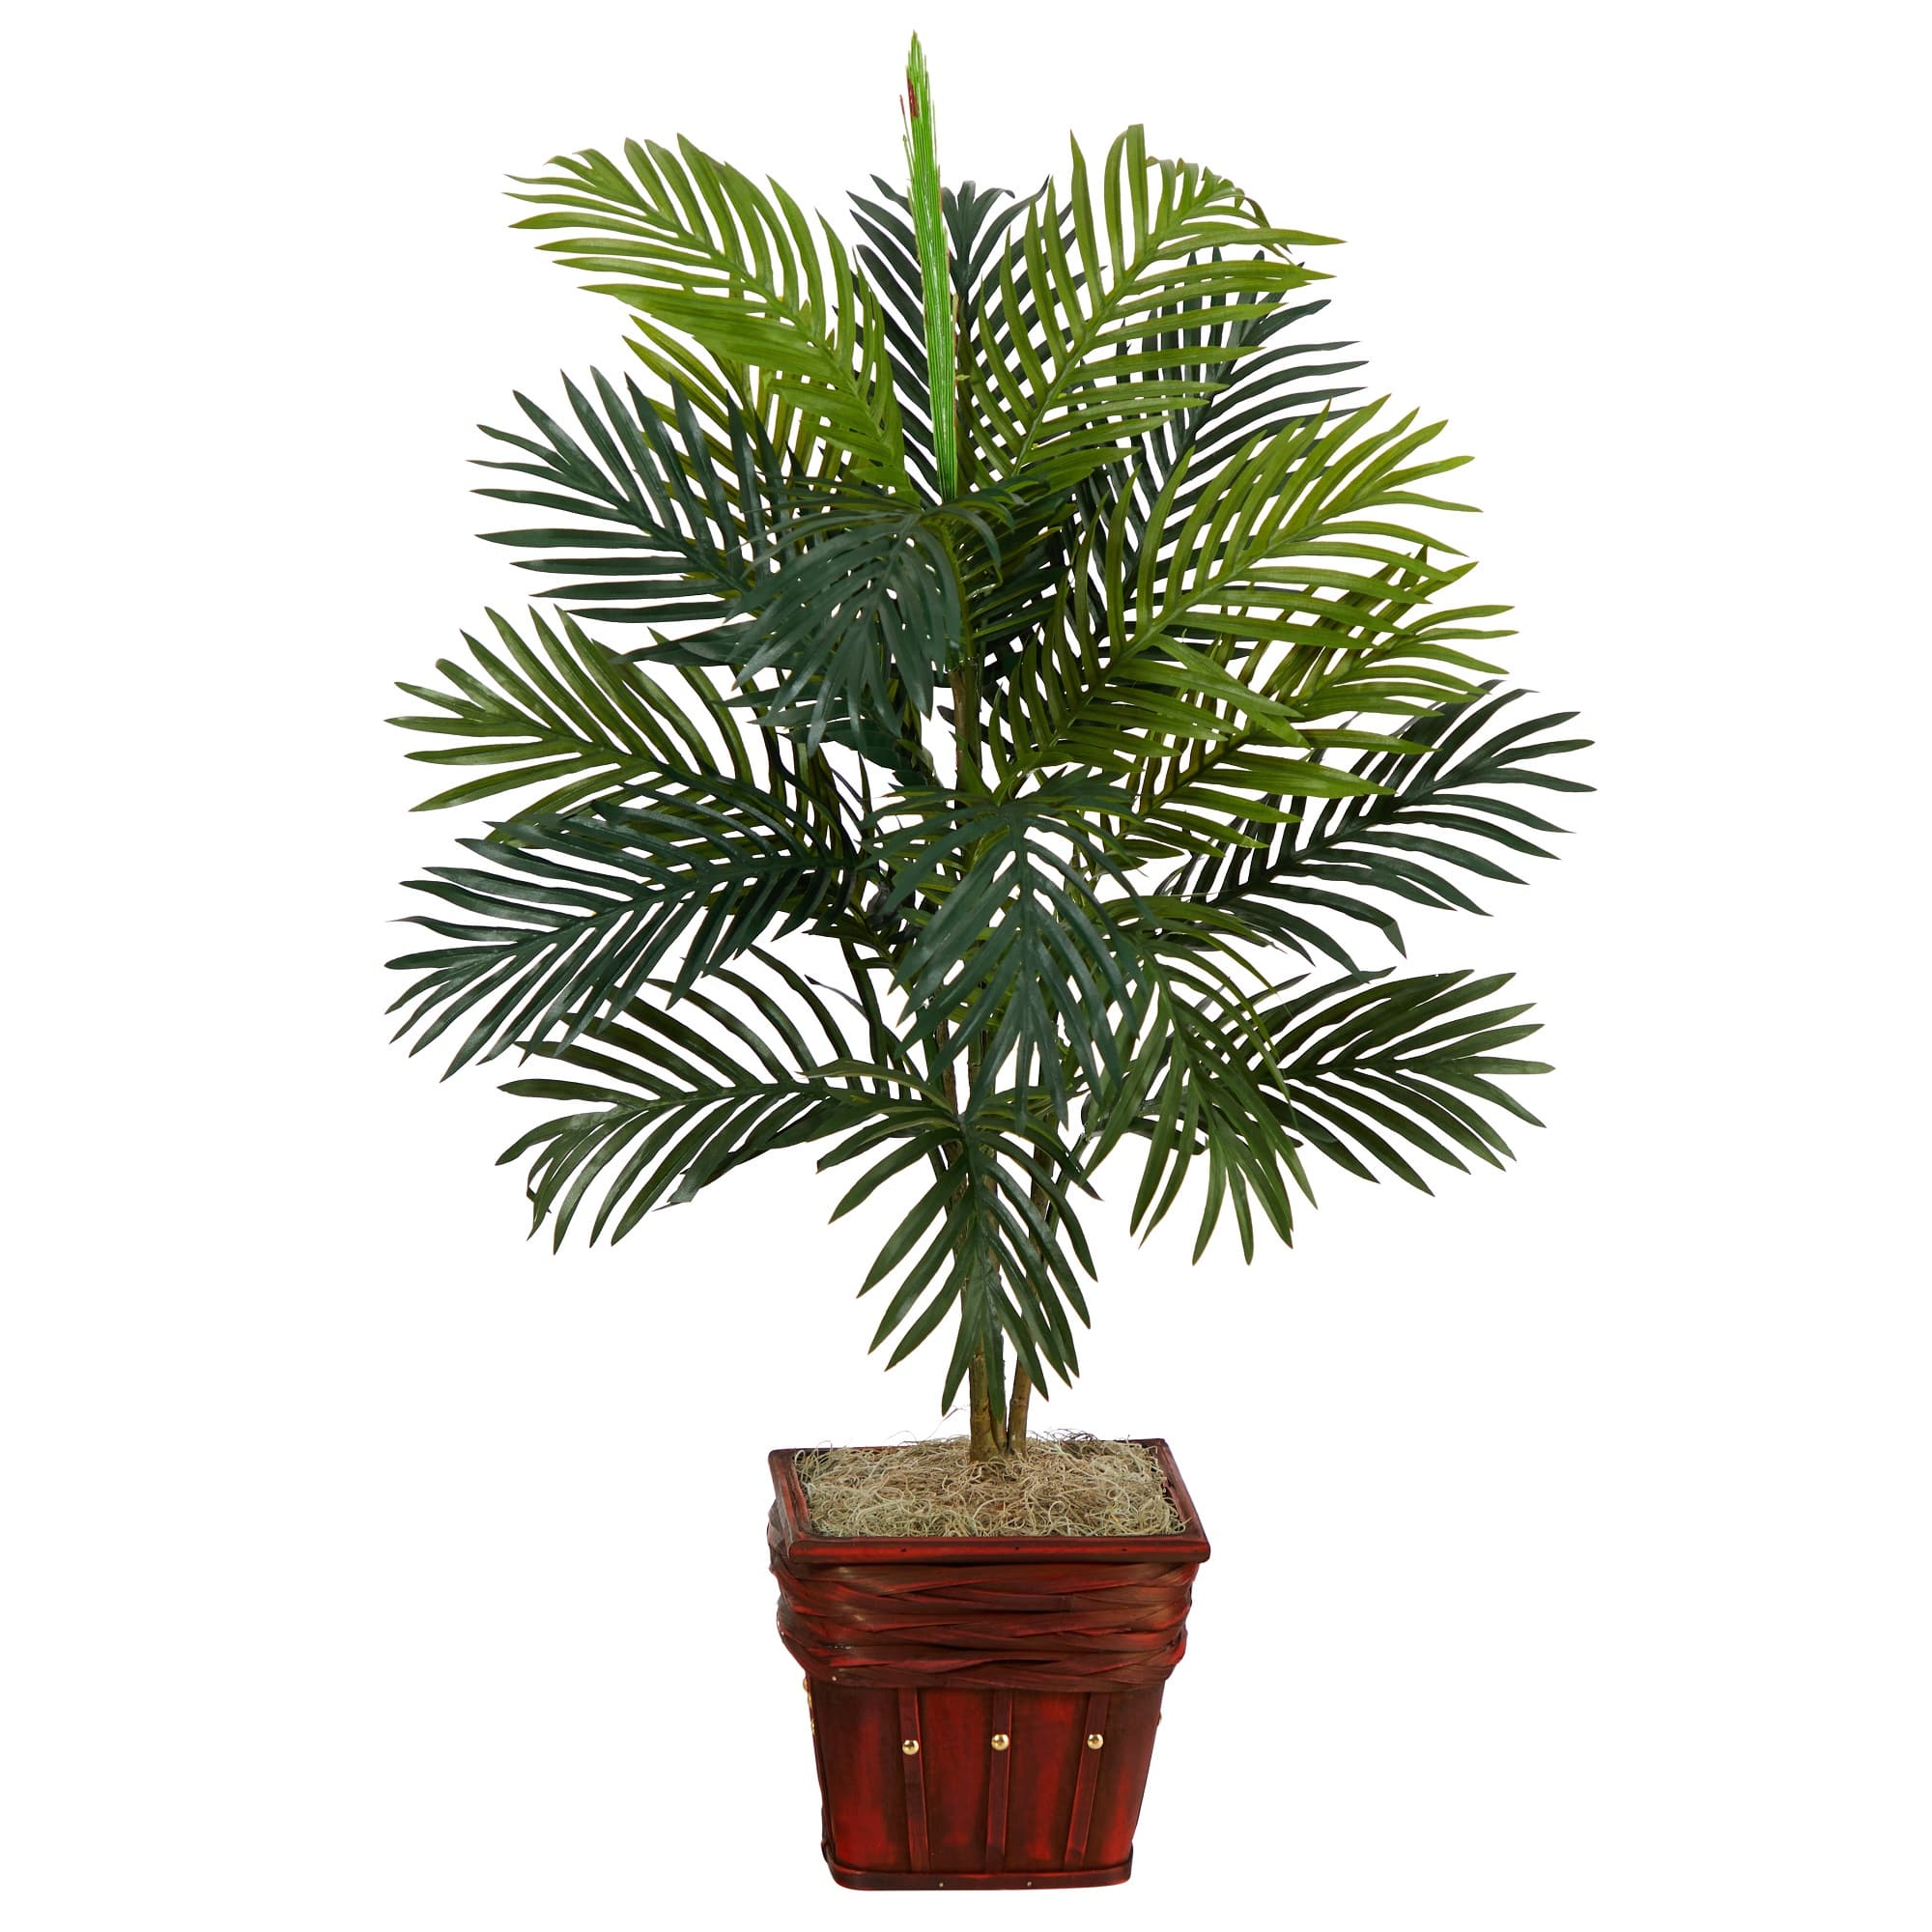 3.16ft. Areca Palm with Wicker Basket Planter